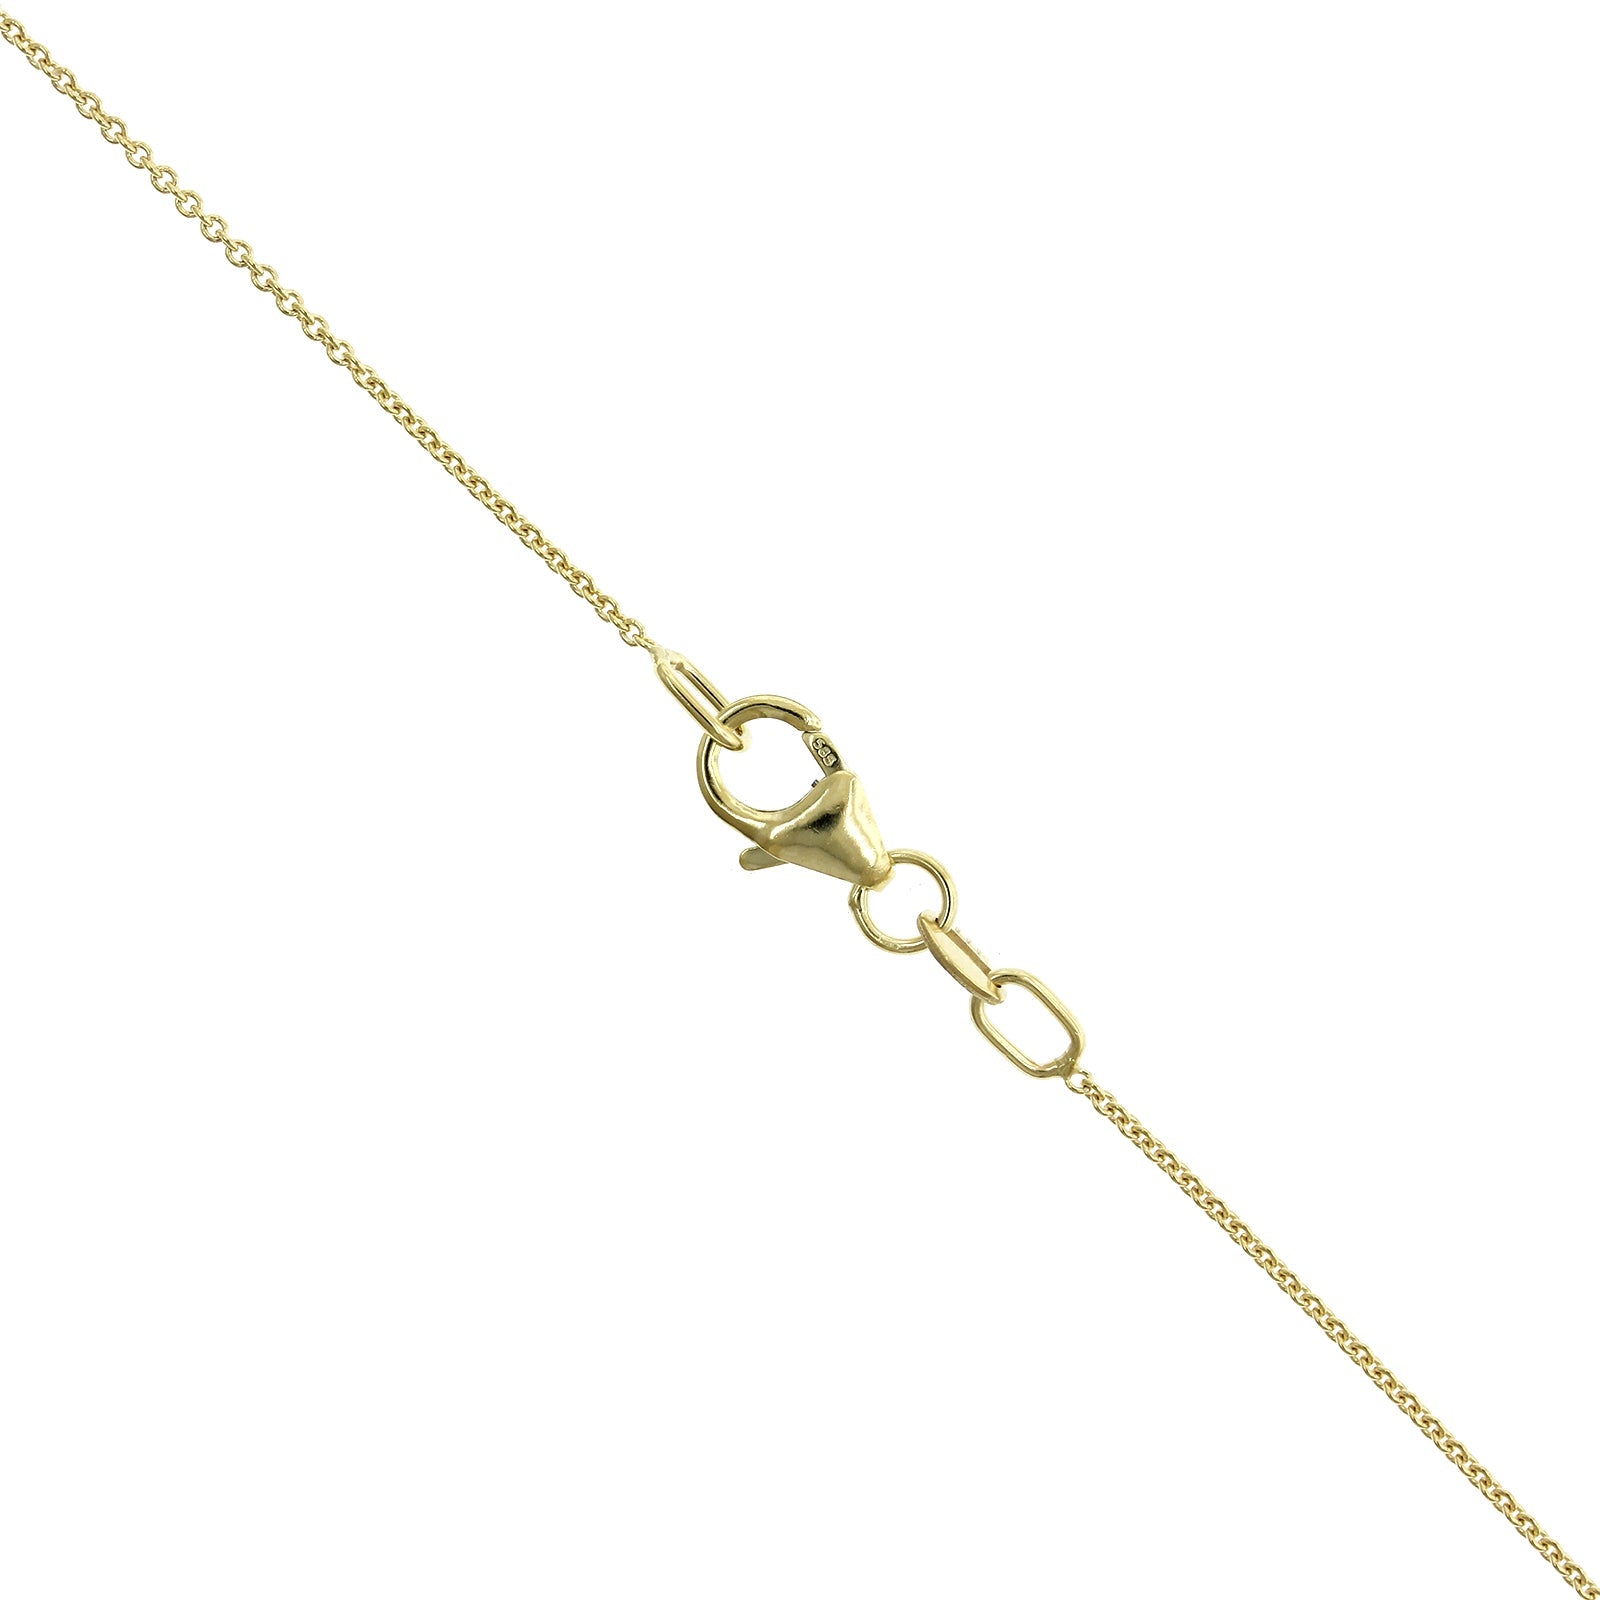 14K Yellow Gold Citrine Pendant, 14k yellow gold, Long's Jewelers